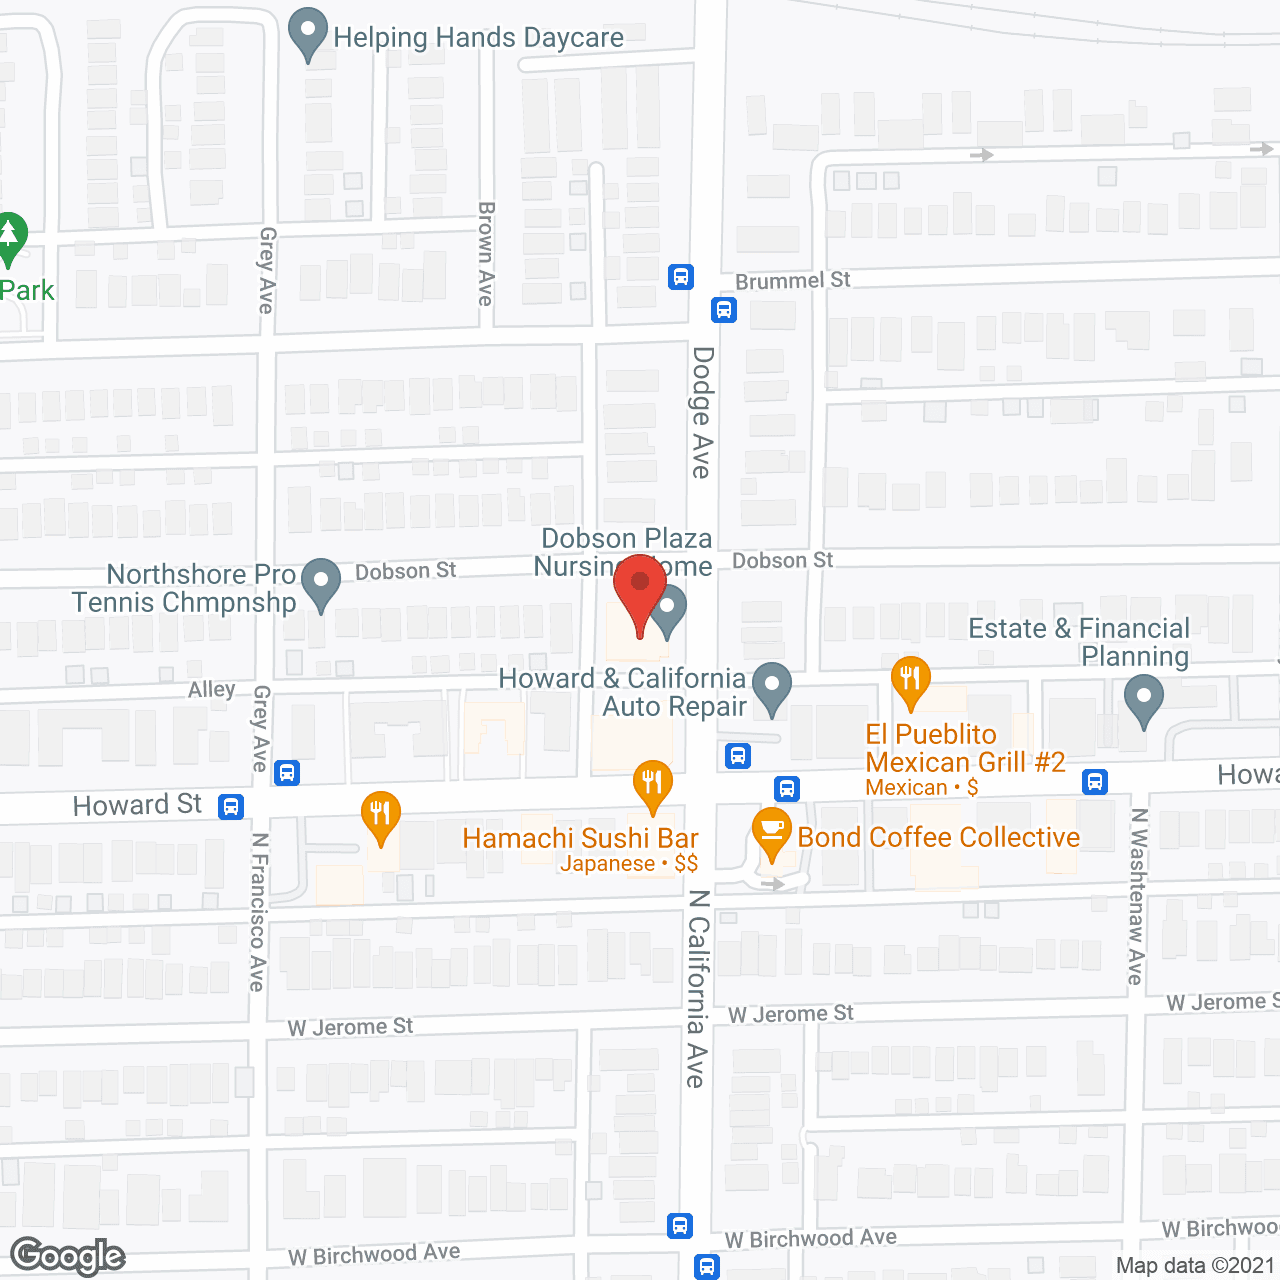 Dobson Plaza Nursing Home in google map